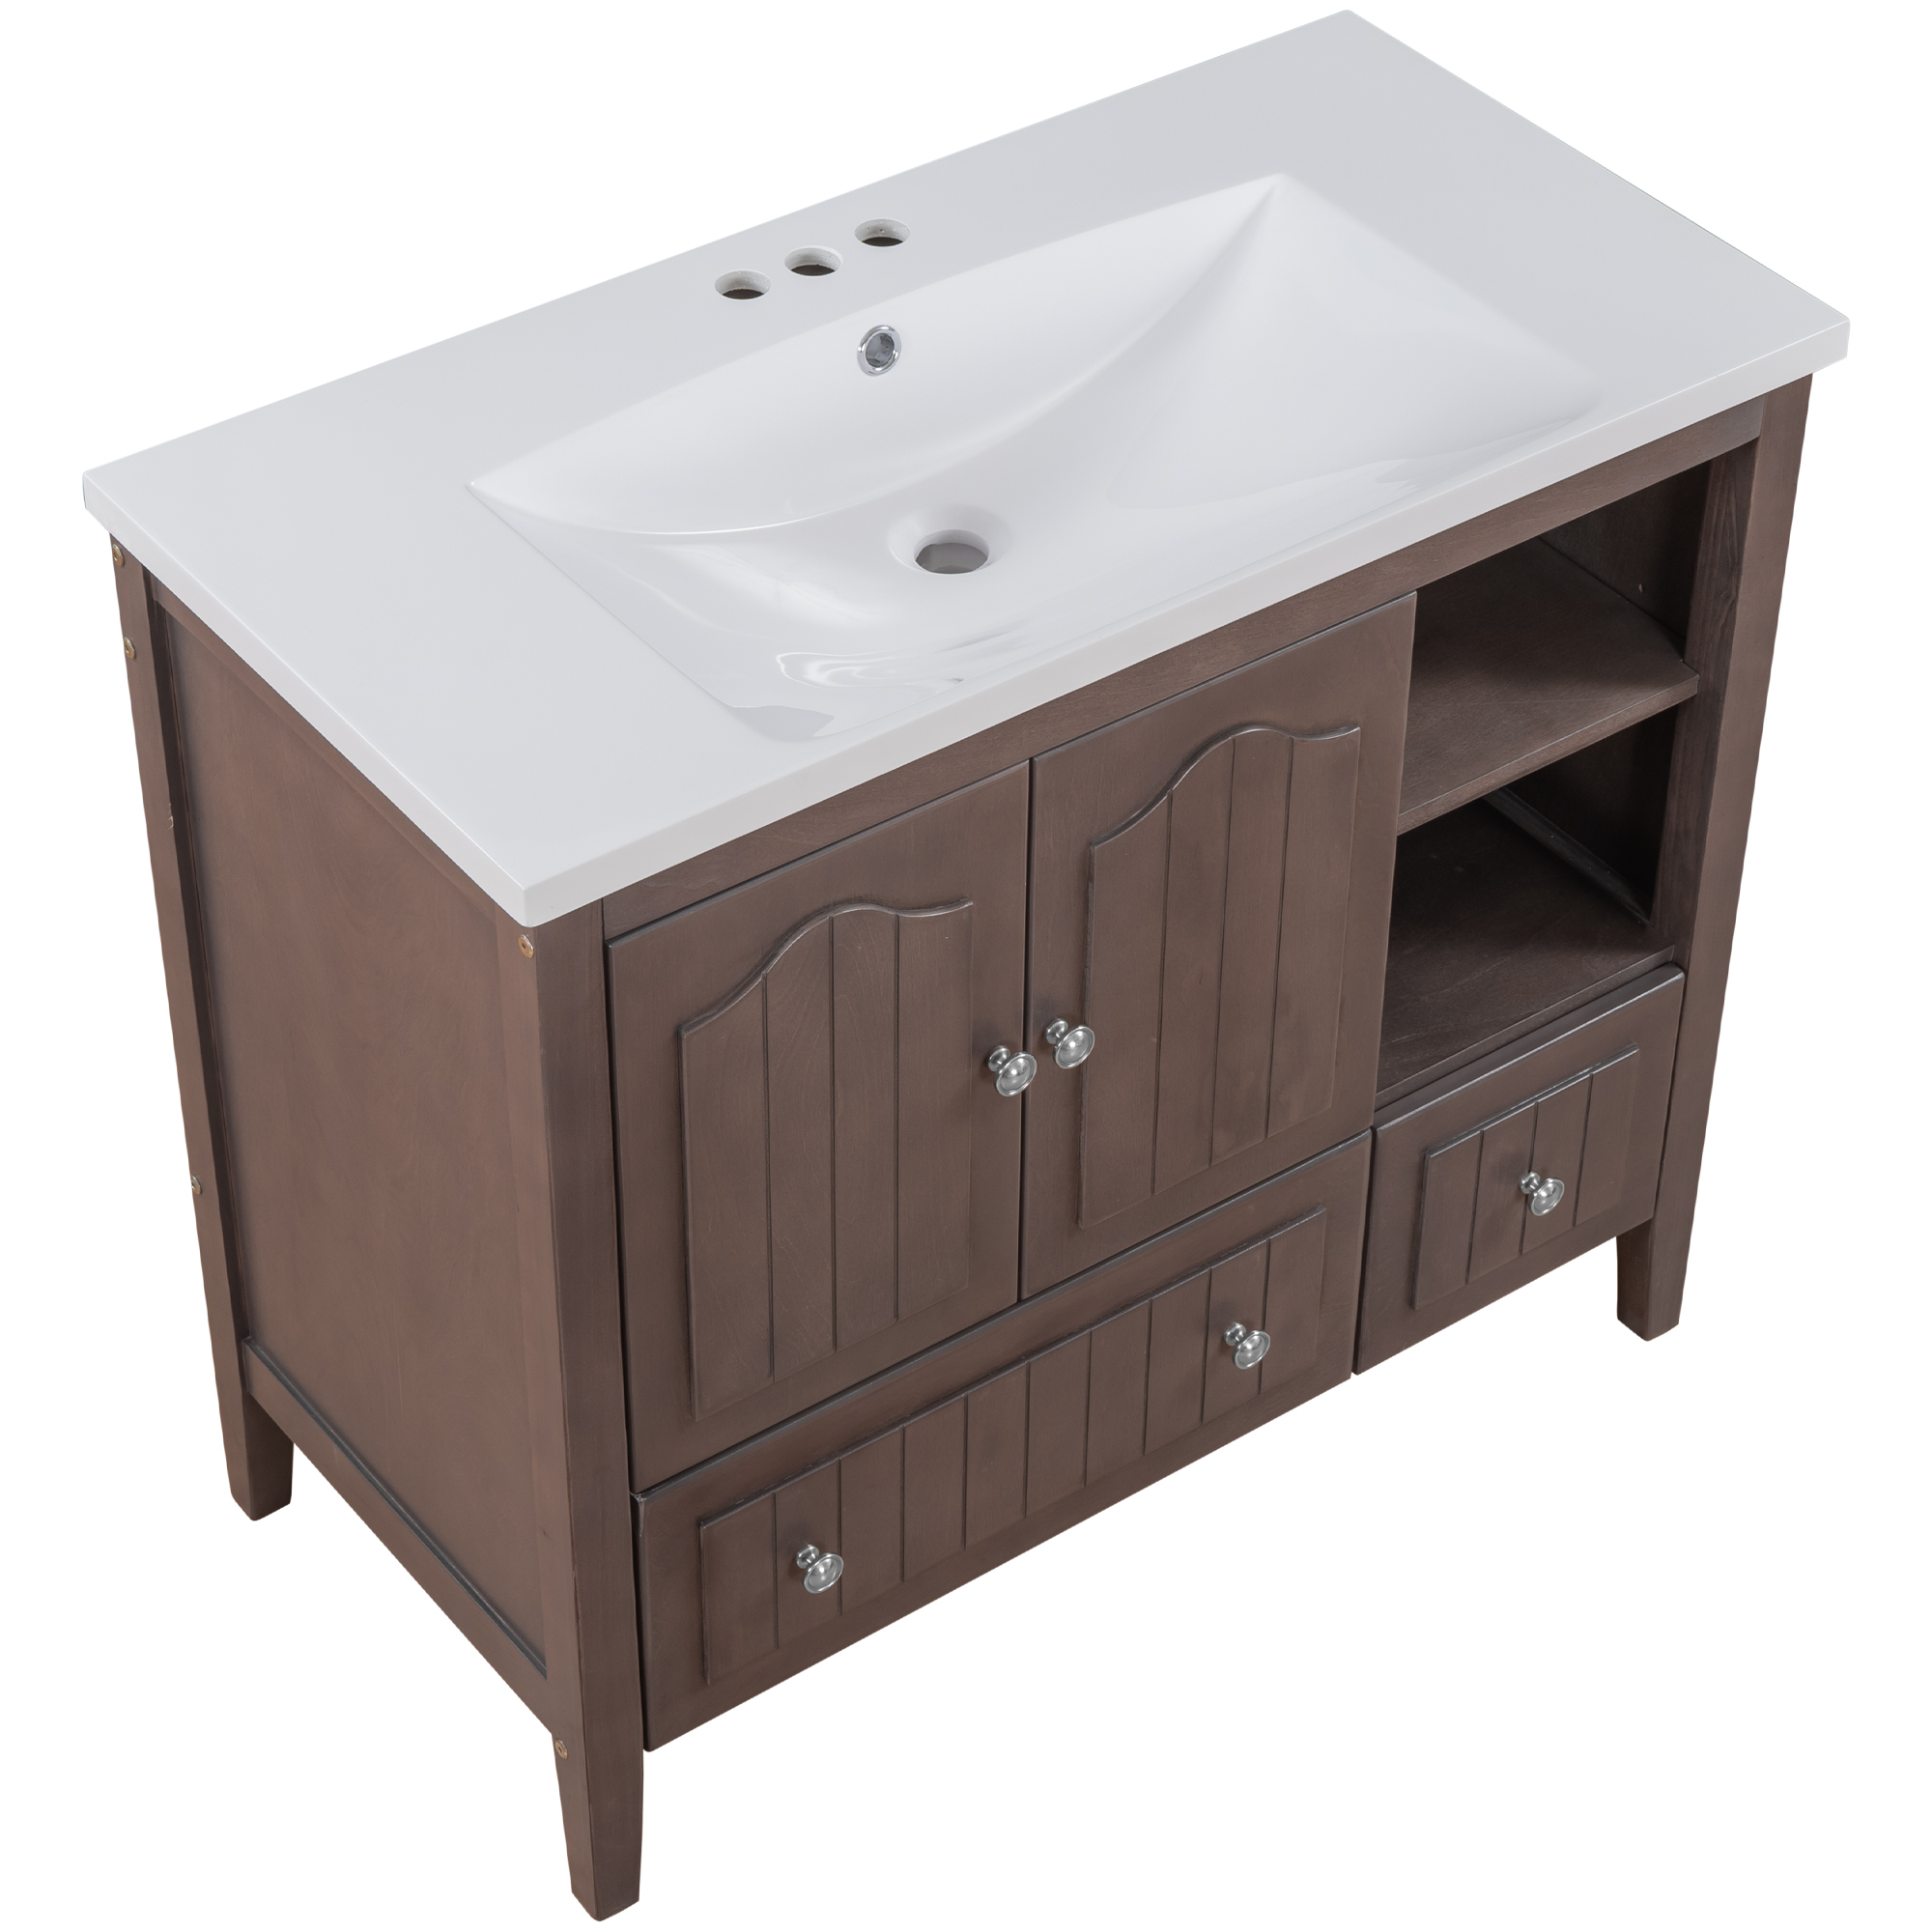 36" Bathroom Vanity With Ceramic Basin - JL000003AAD